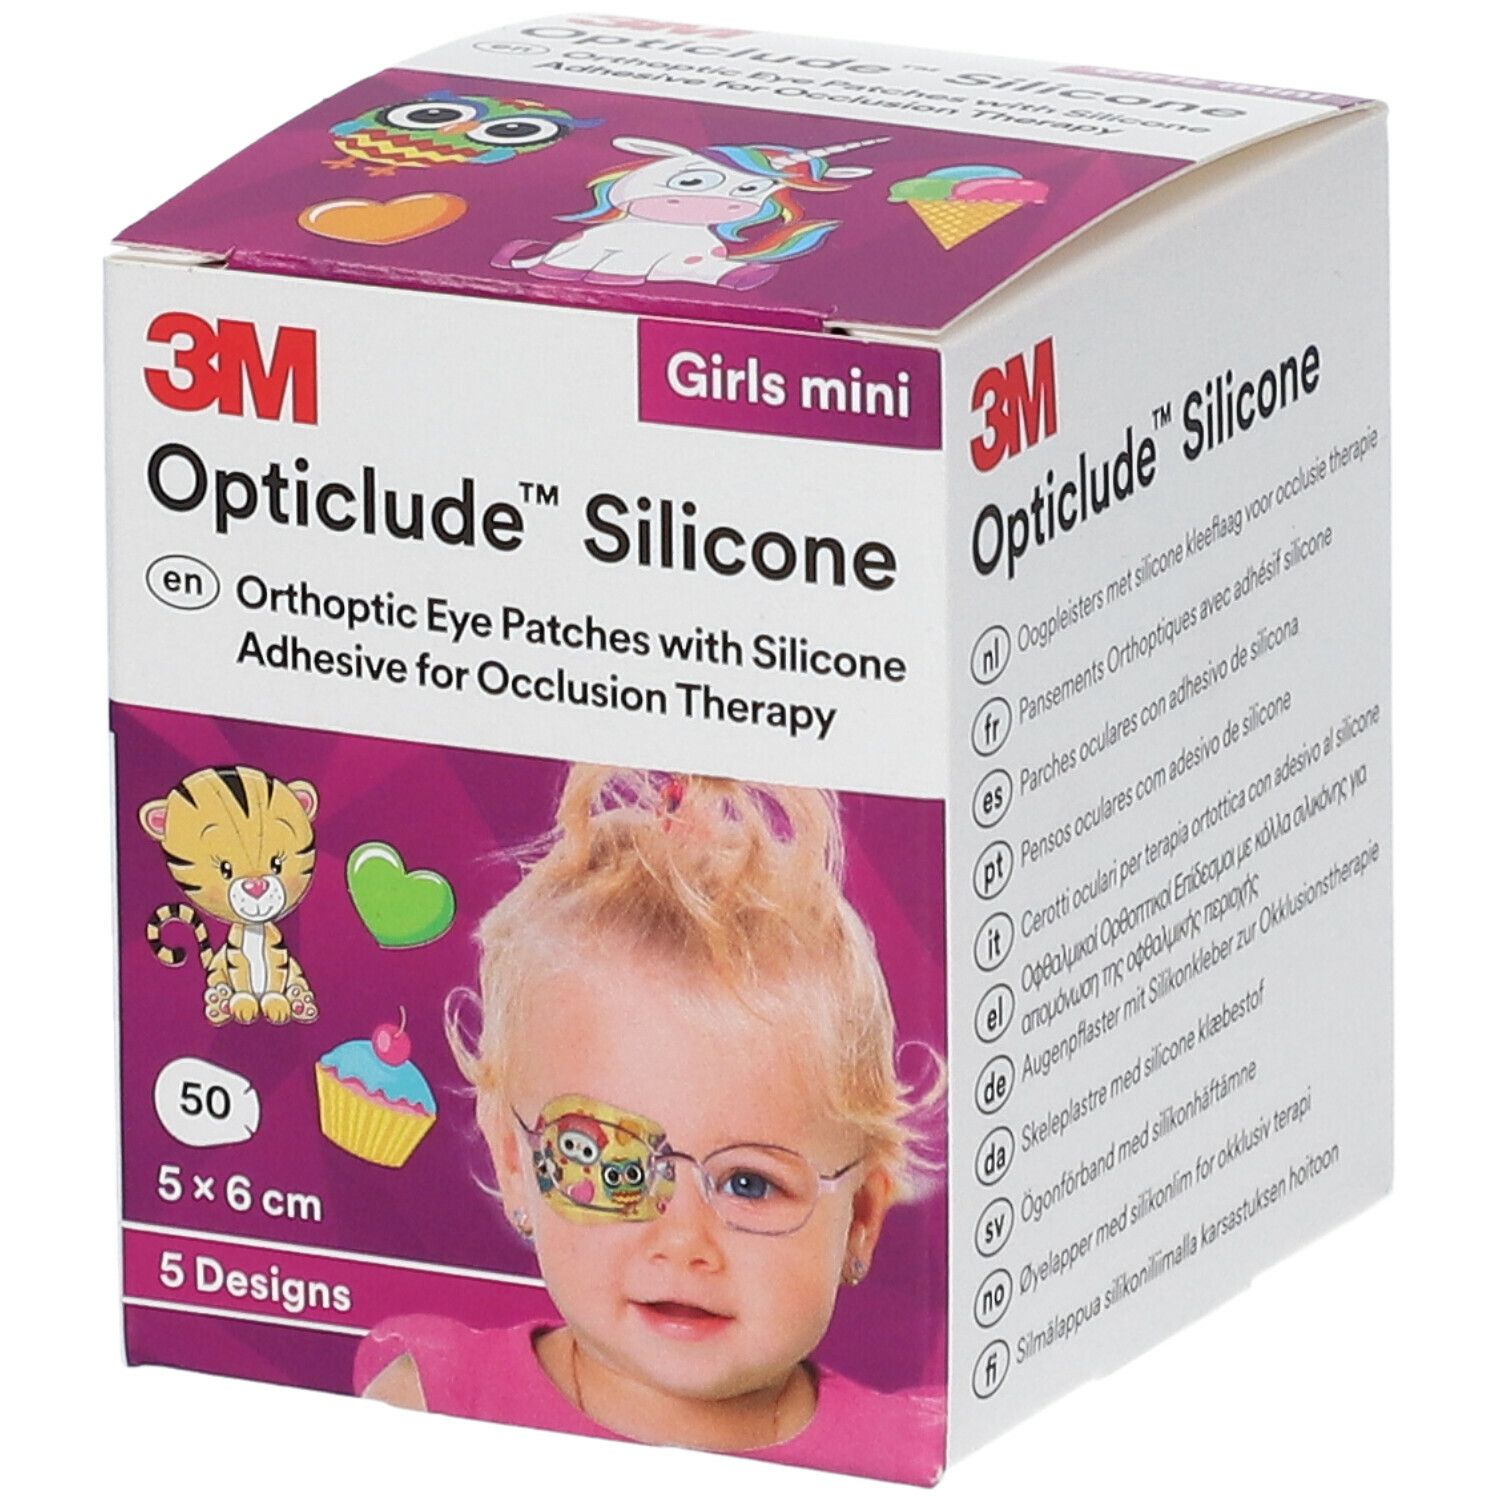 Image of 3M Opticlude™ Silicone Girls mini Augenpflaster 5 x 6 cm